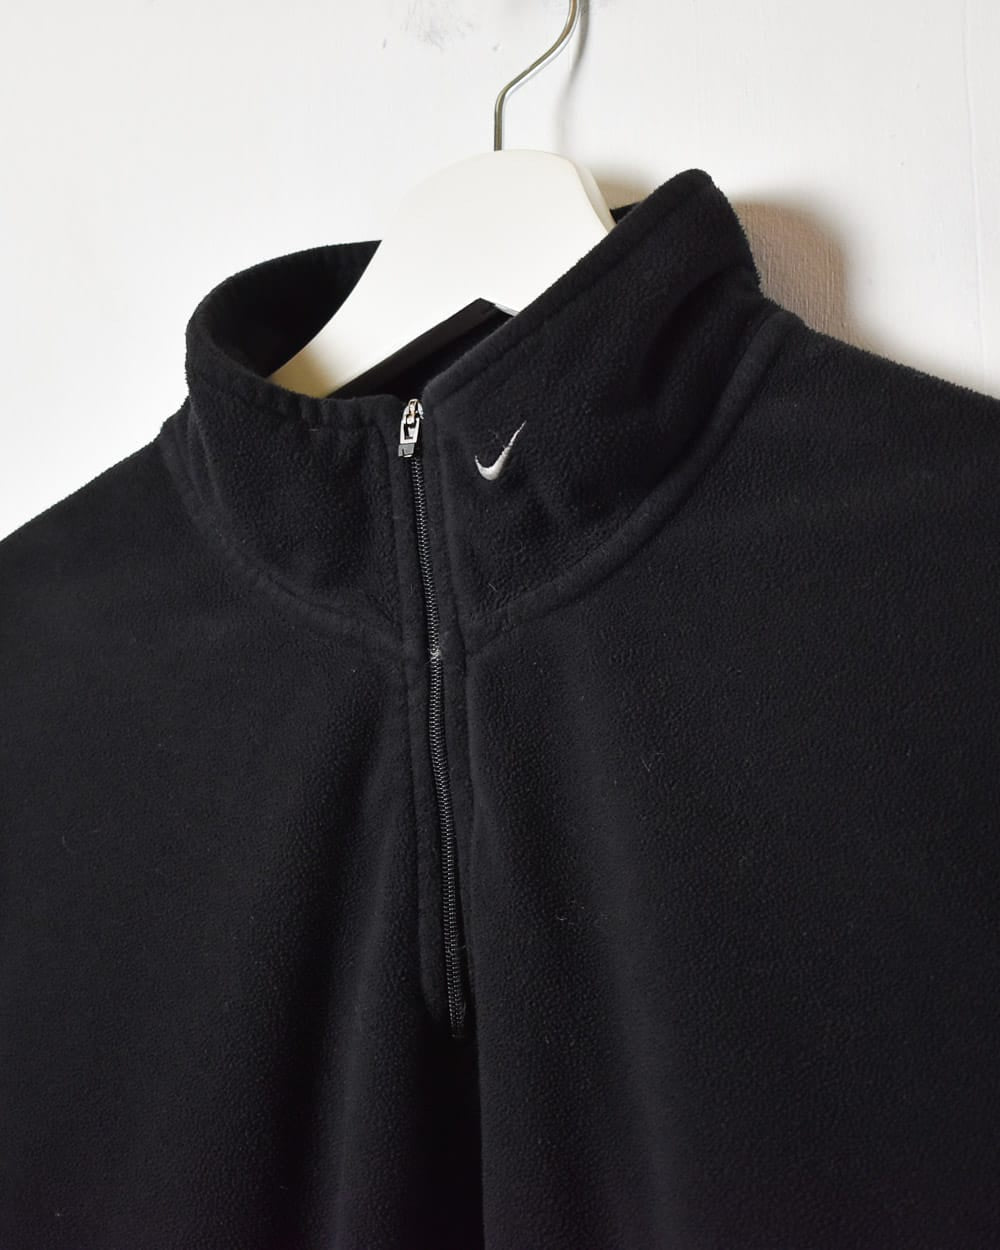 Black Nike 1/4 Zip Fleece - Large Women's